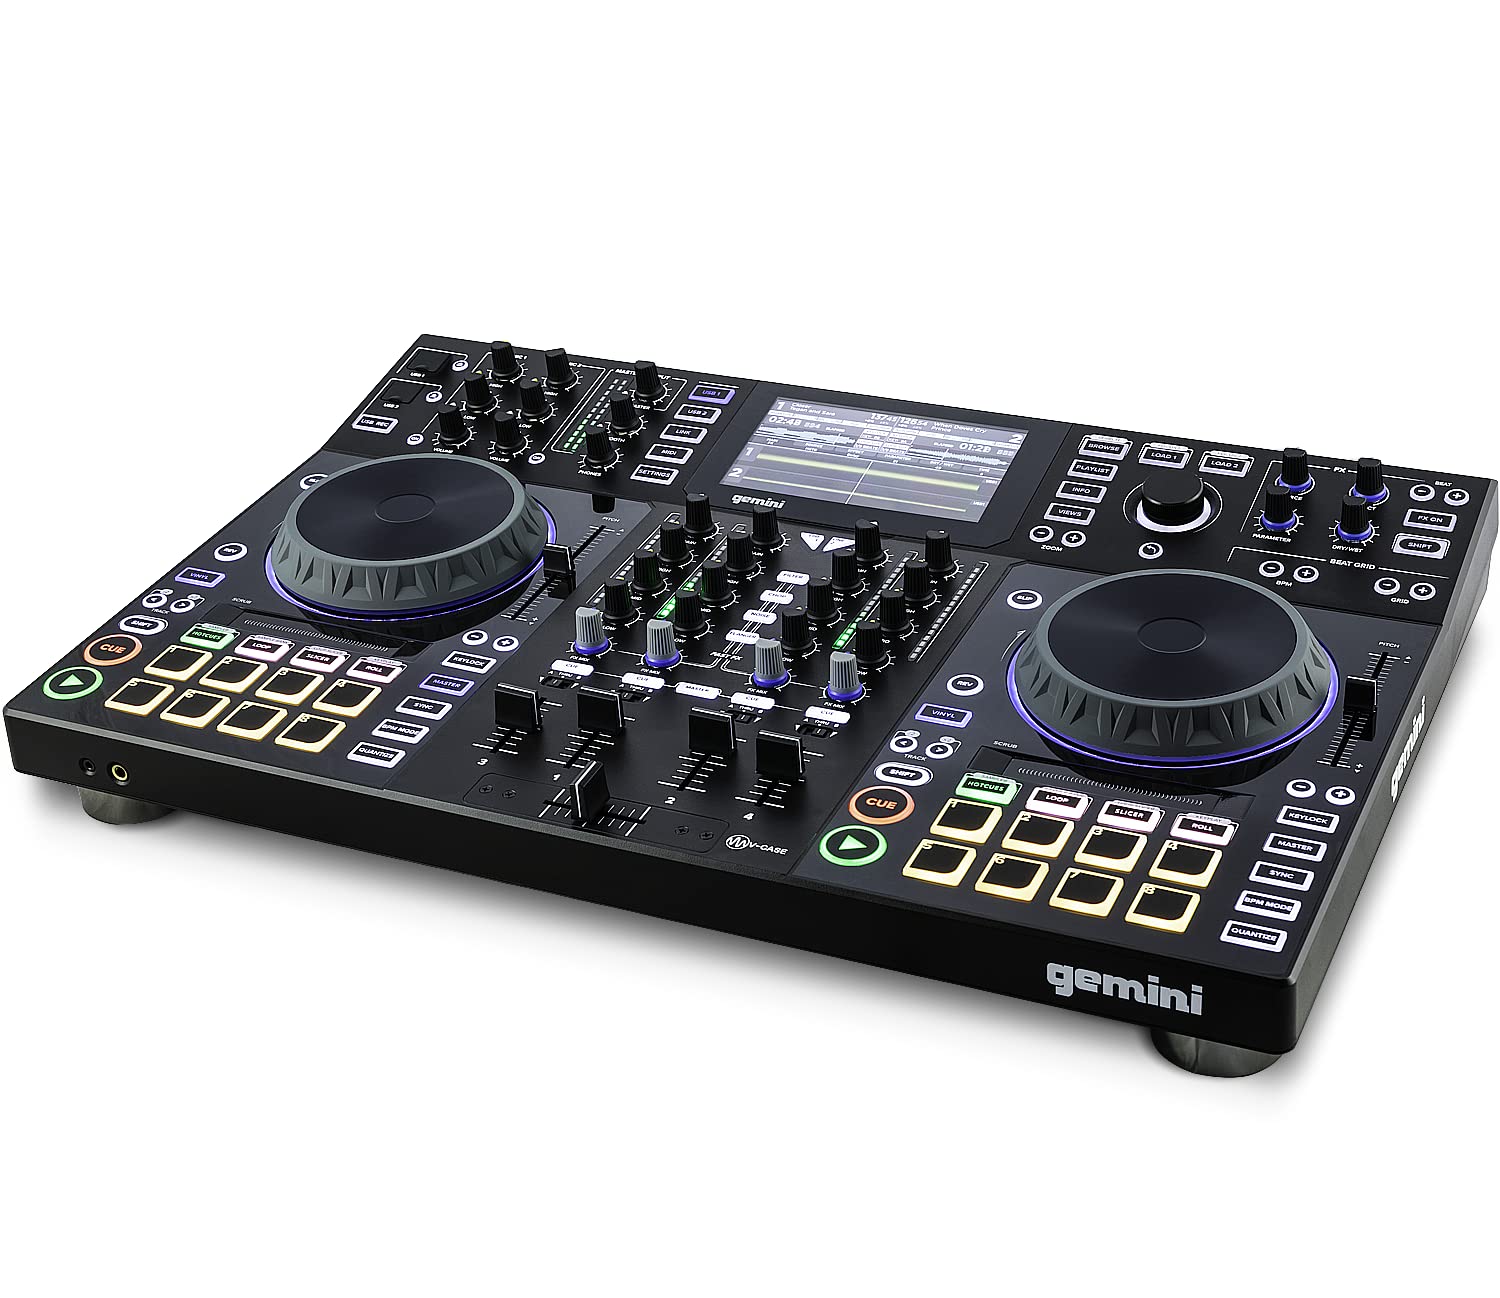 DJ equipment or DJ mixer